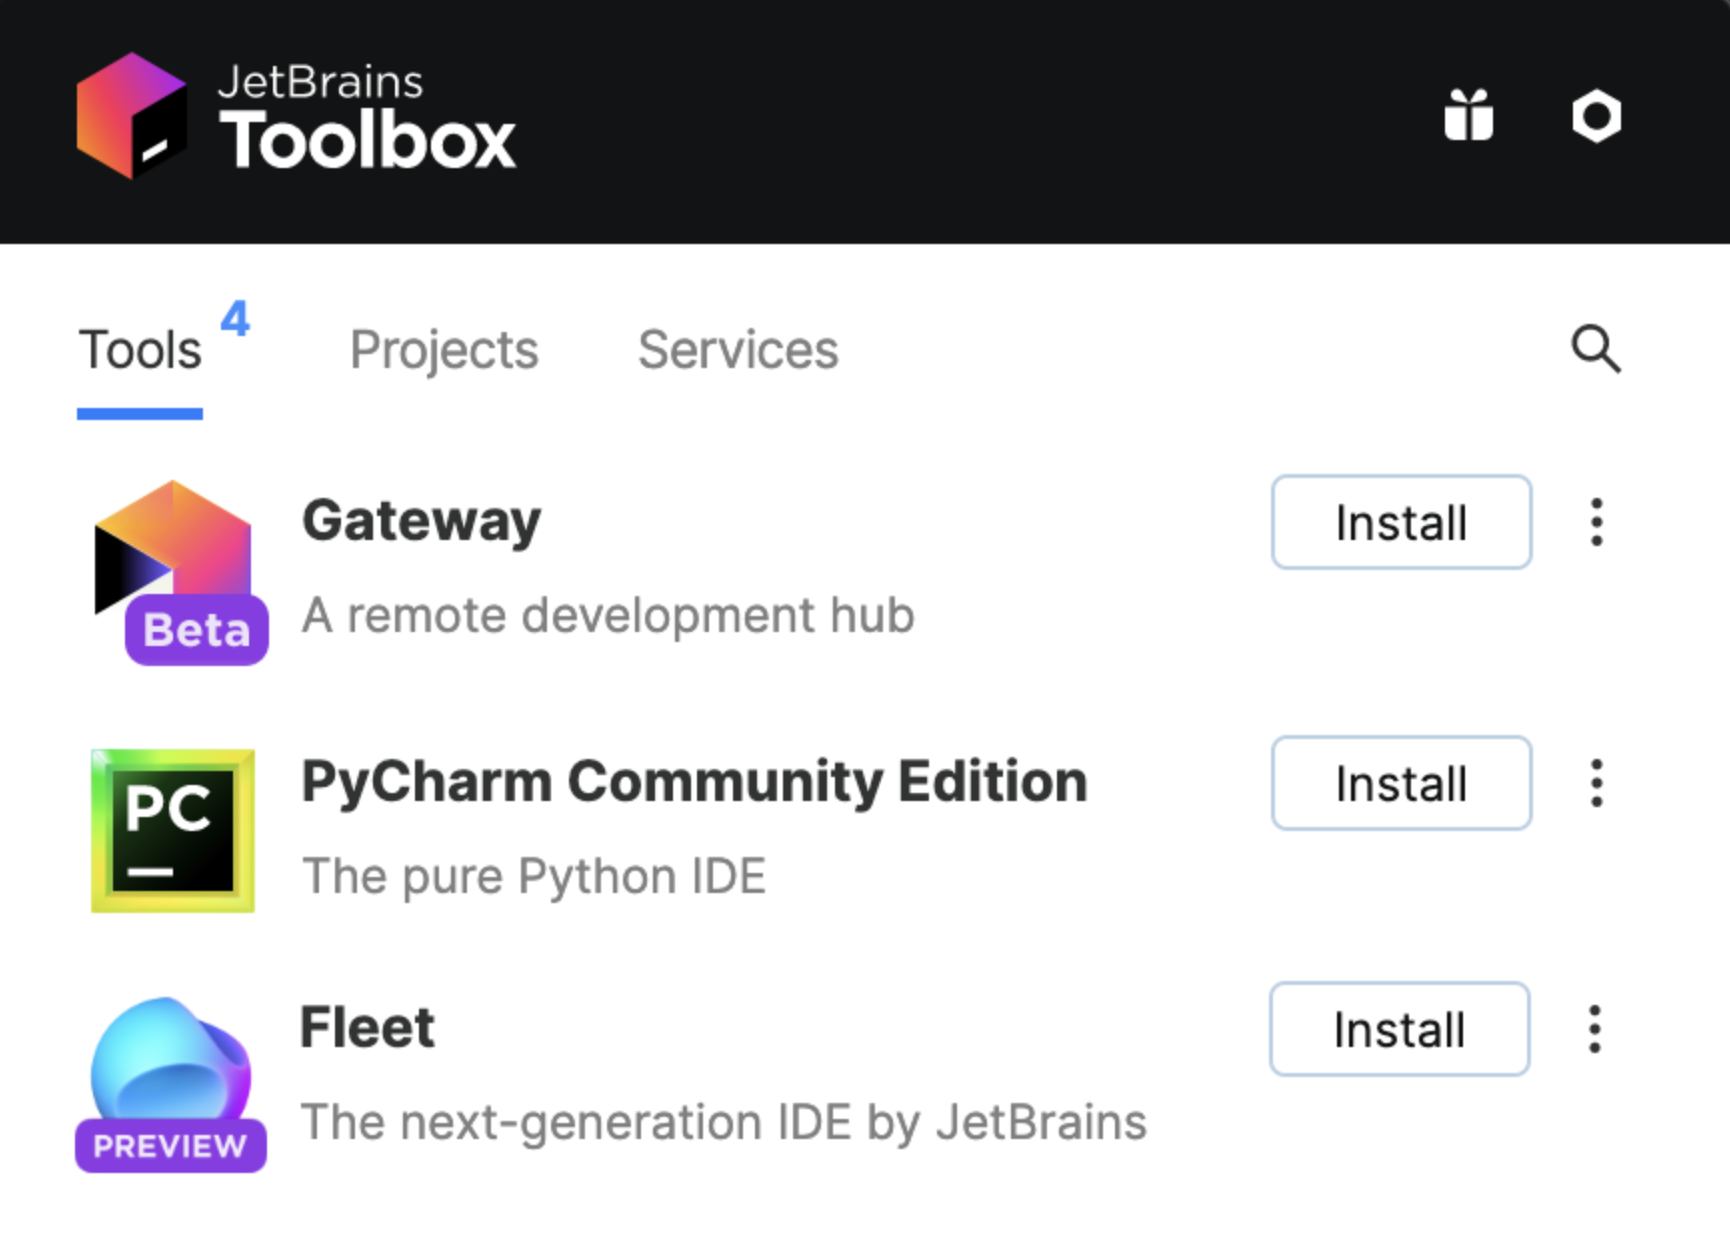 Installing Gateway via Toolbox